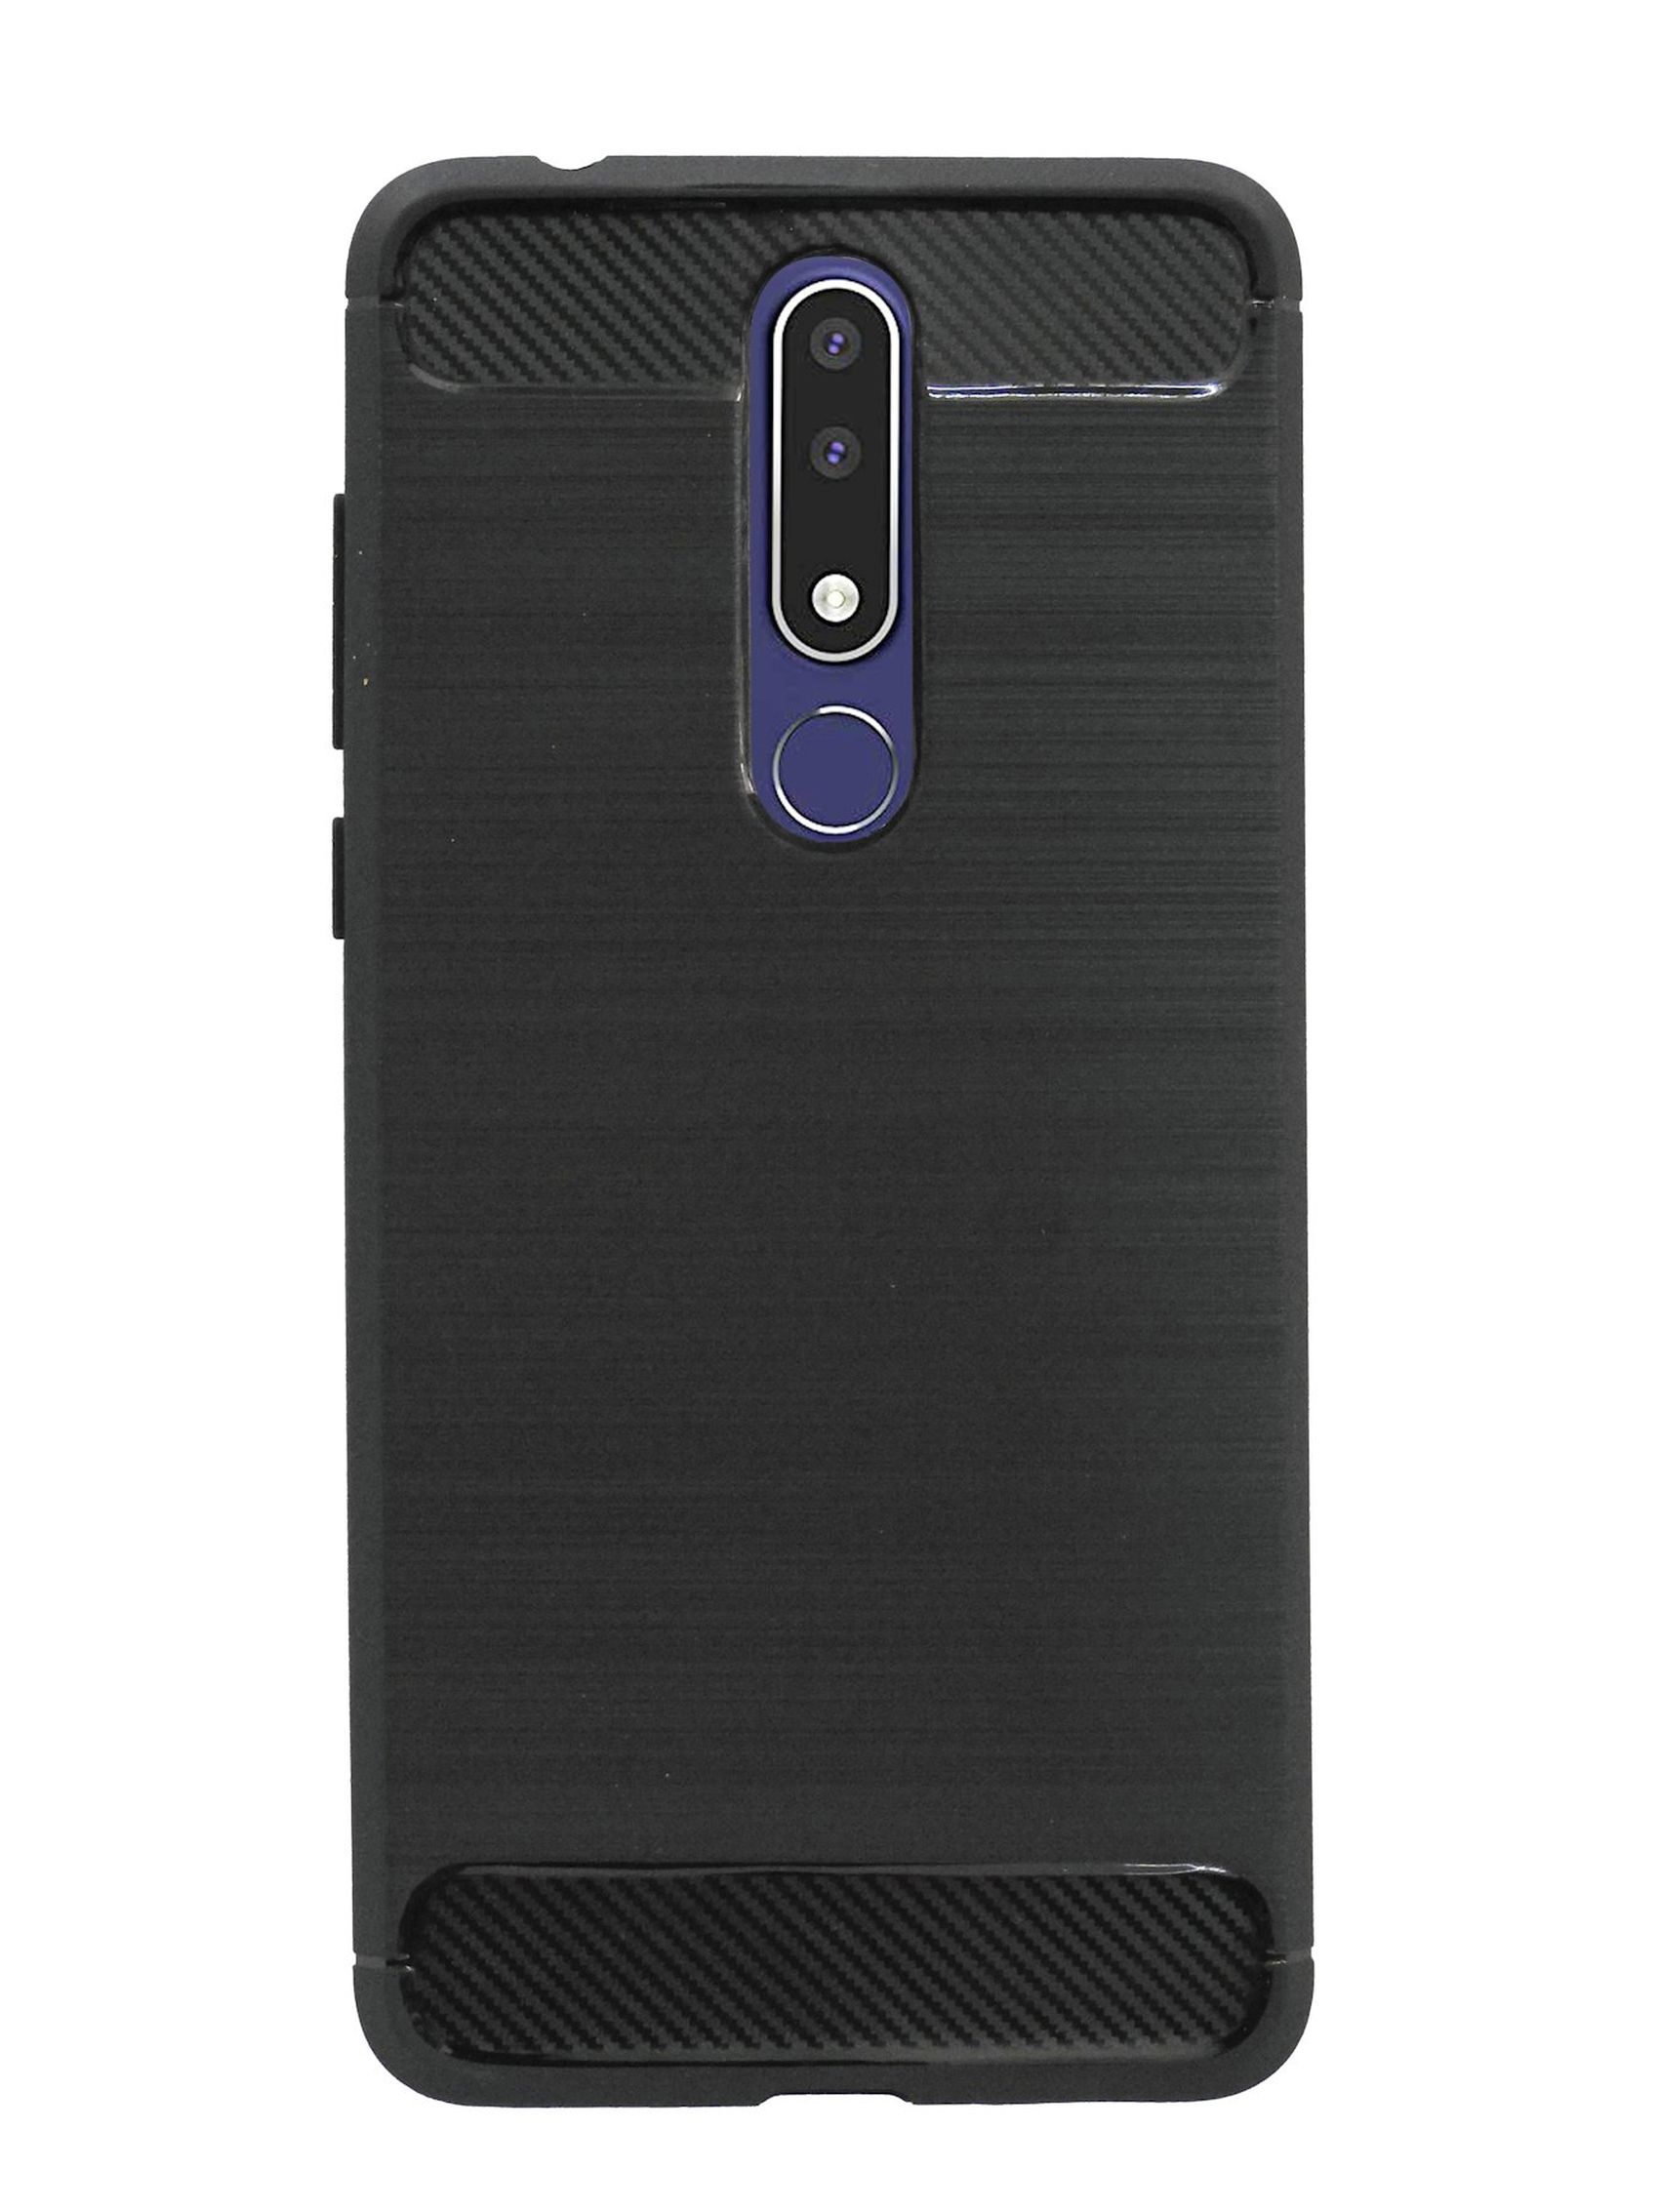 Bumper, Carbon-Look Schwarz Nokia, COFI Case, Plus, 3.1